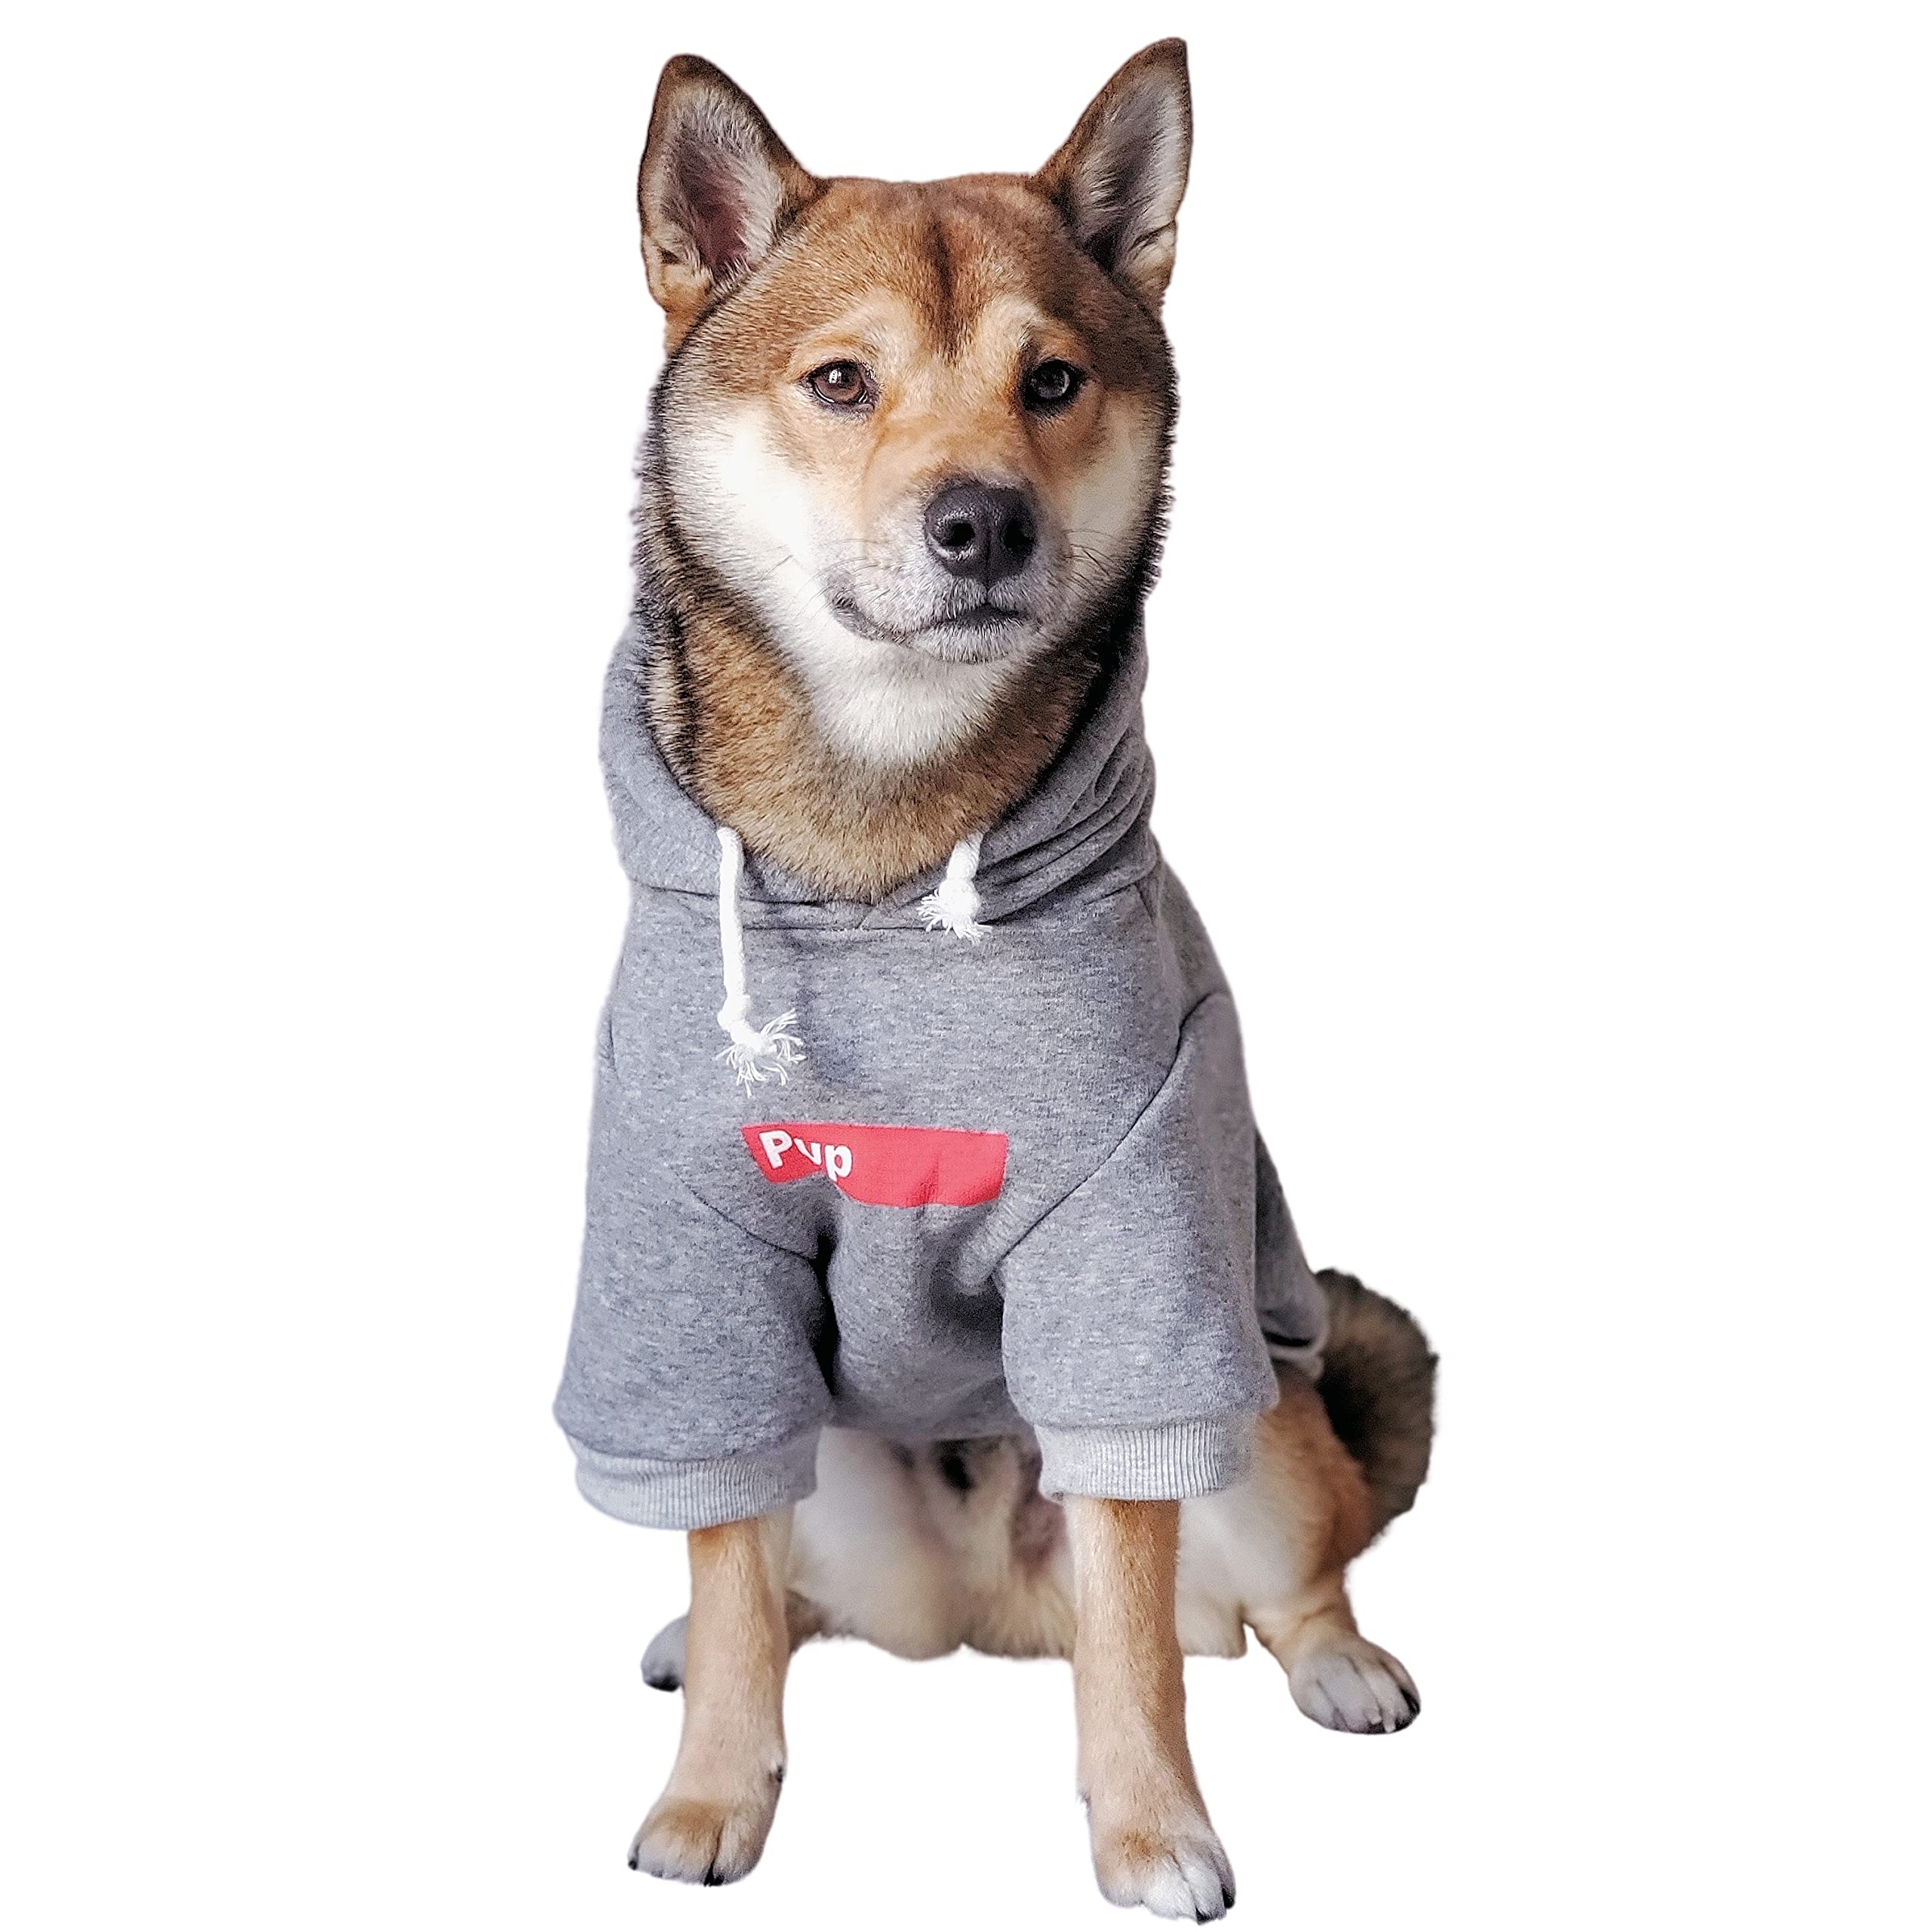 chochocho Pup Dog Hoodie Dog Sweater Fashion Dog clothes Pet clothing cotton cat Hoodies Stylish Streetwear Sweatshirt gray Trac